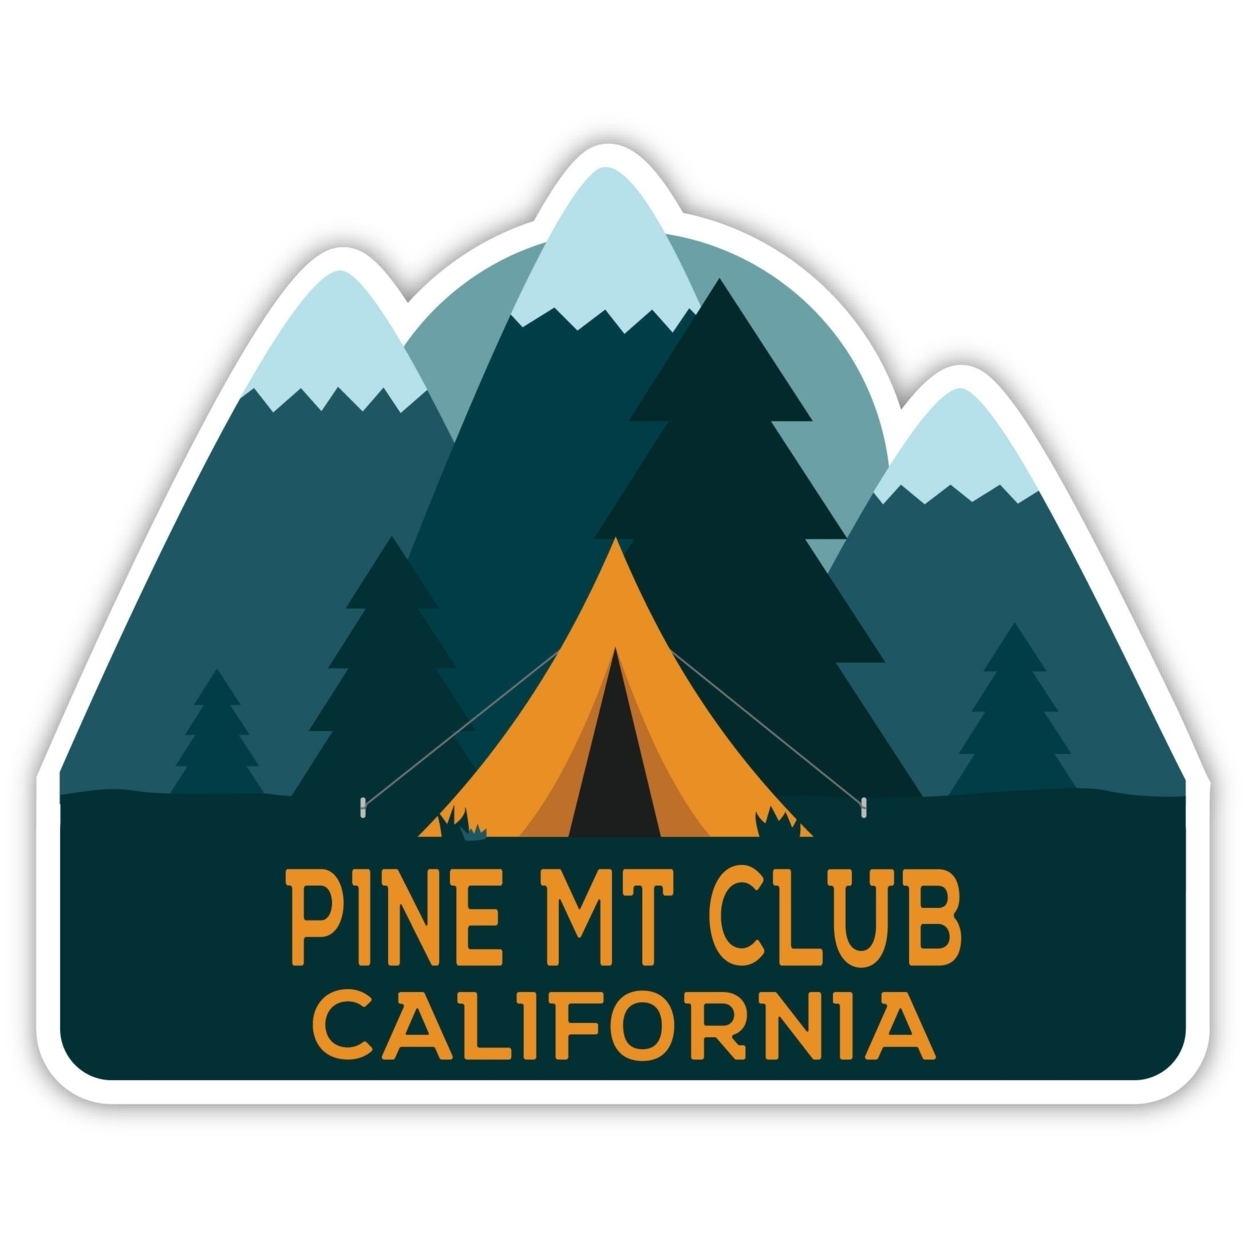 Pine Mt Club California Souvenir Decorative Stickers (Choose Theme And Size) - Single Unit, 2-Inch, Tent